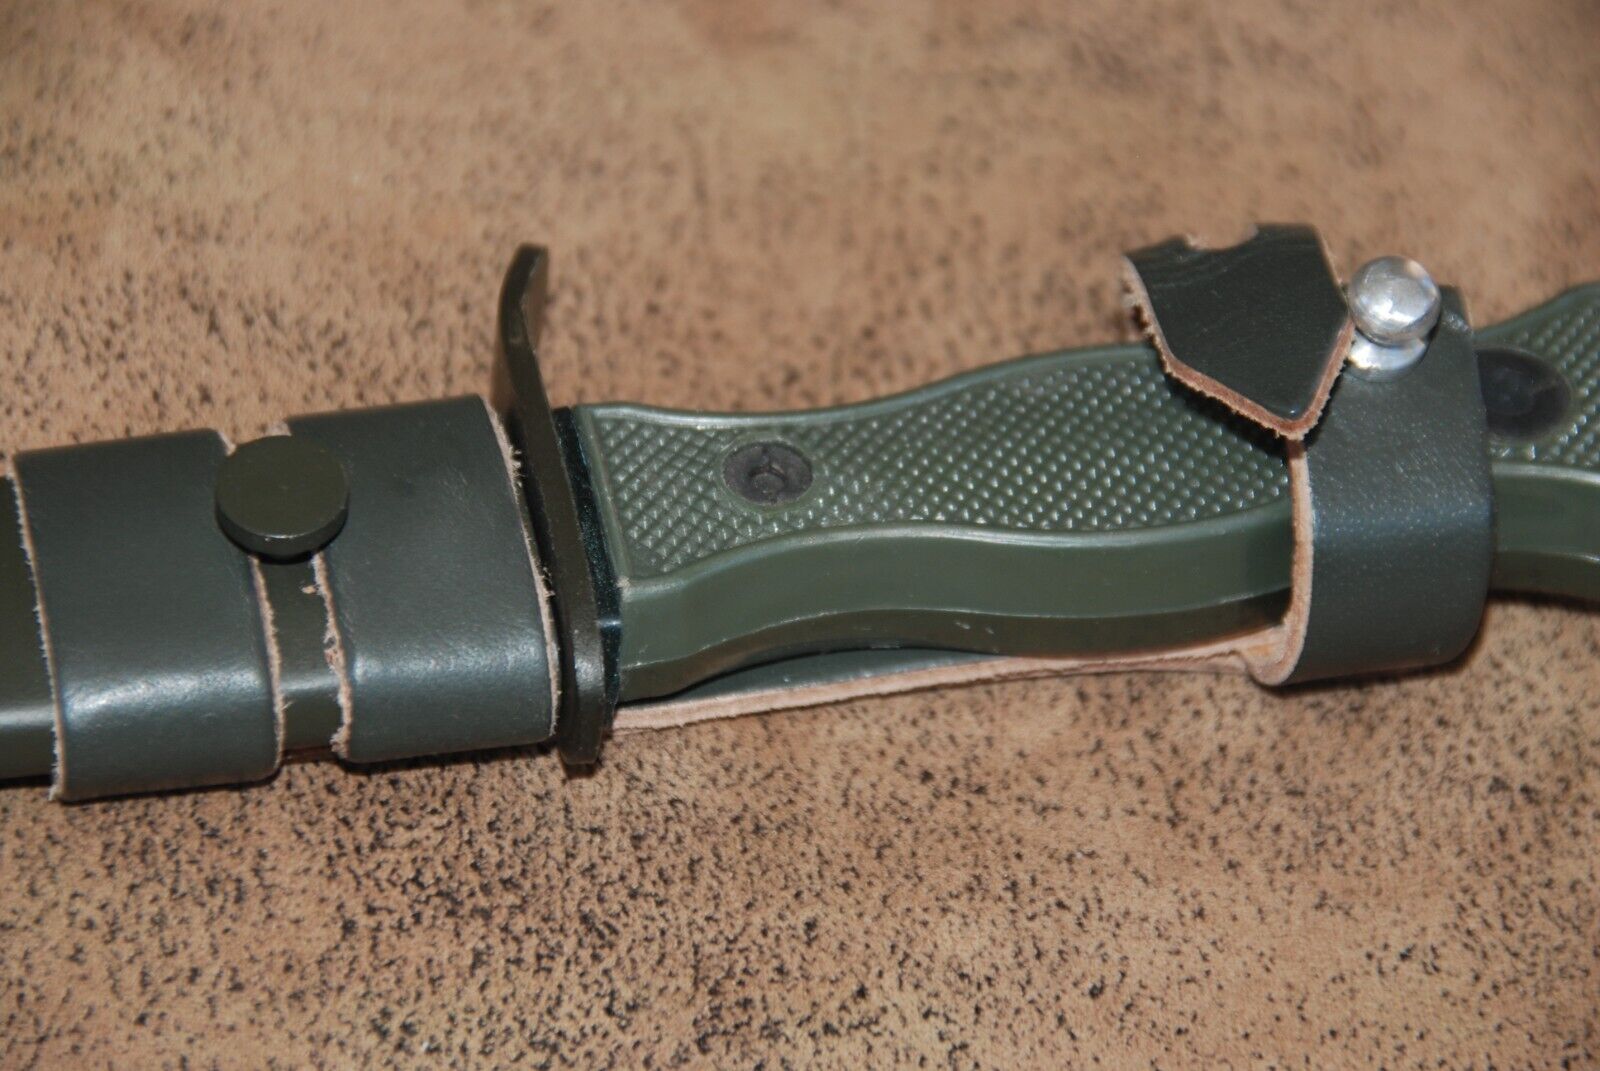 German army Bundeswehr Kampfmesser fixed blade knife with metal sheath, Mil-Tec